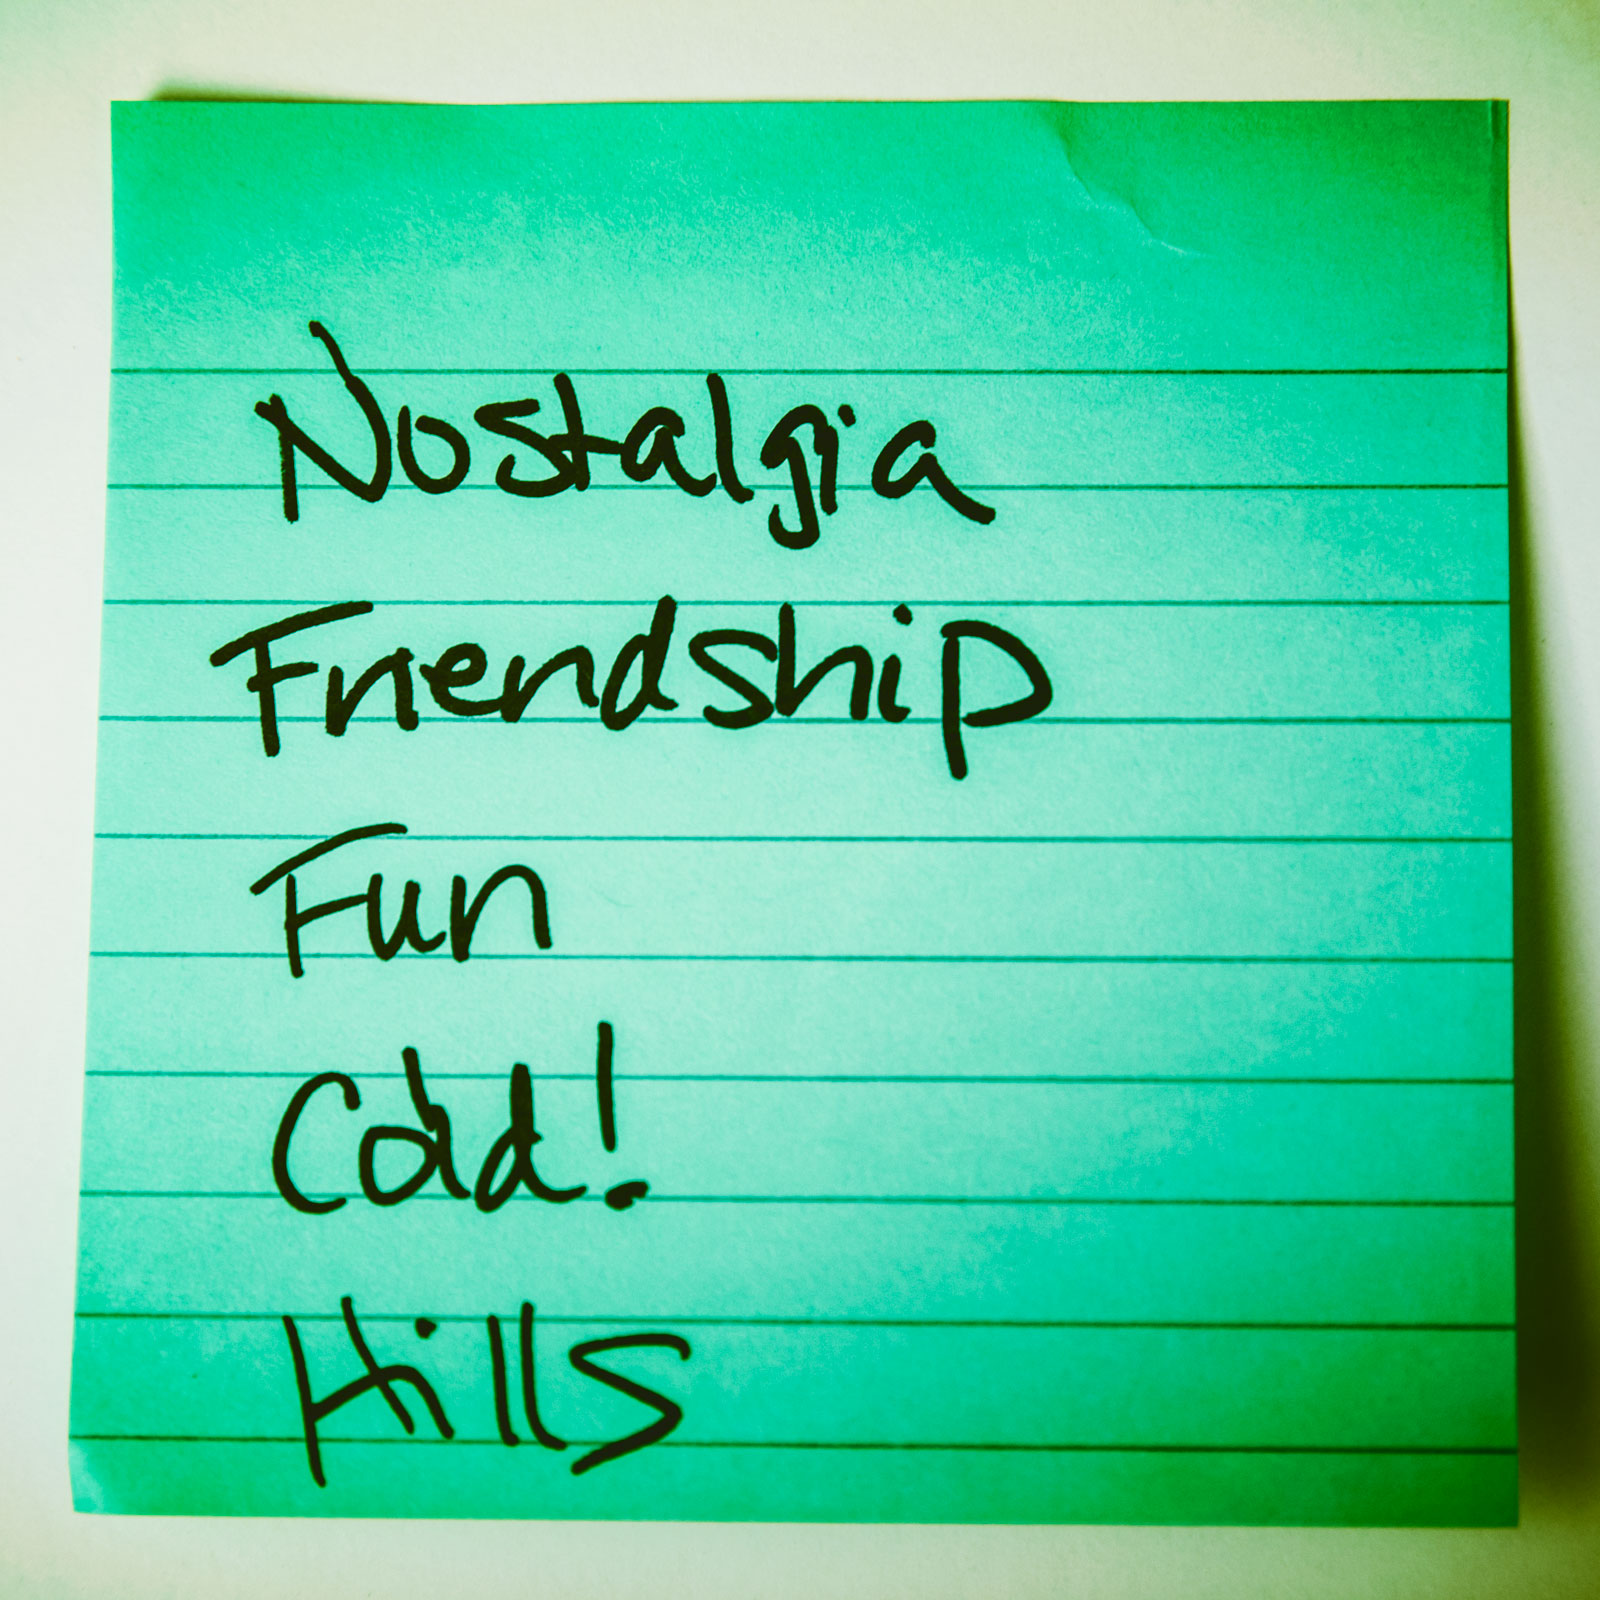 Nostalgia friendship fun cold! hills